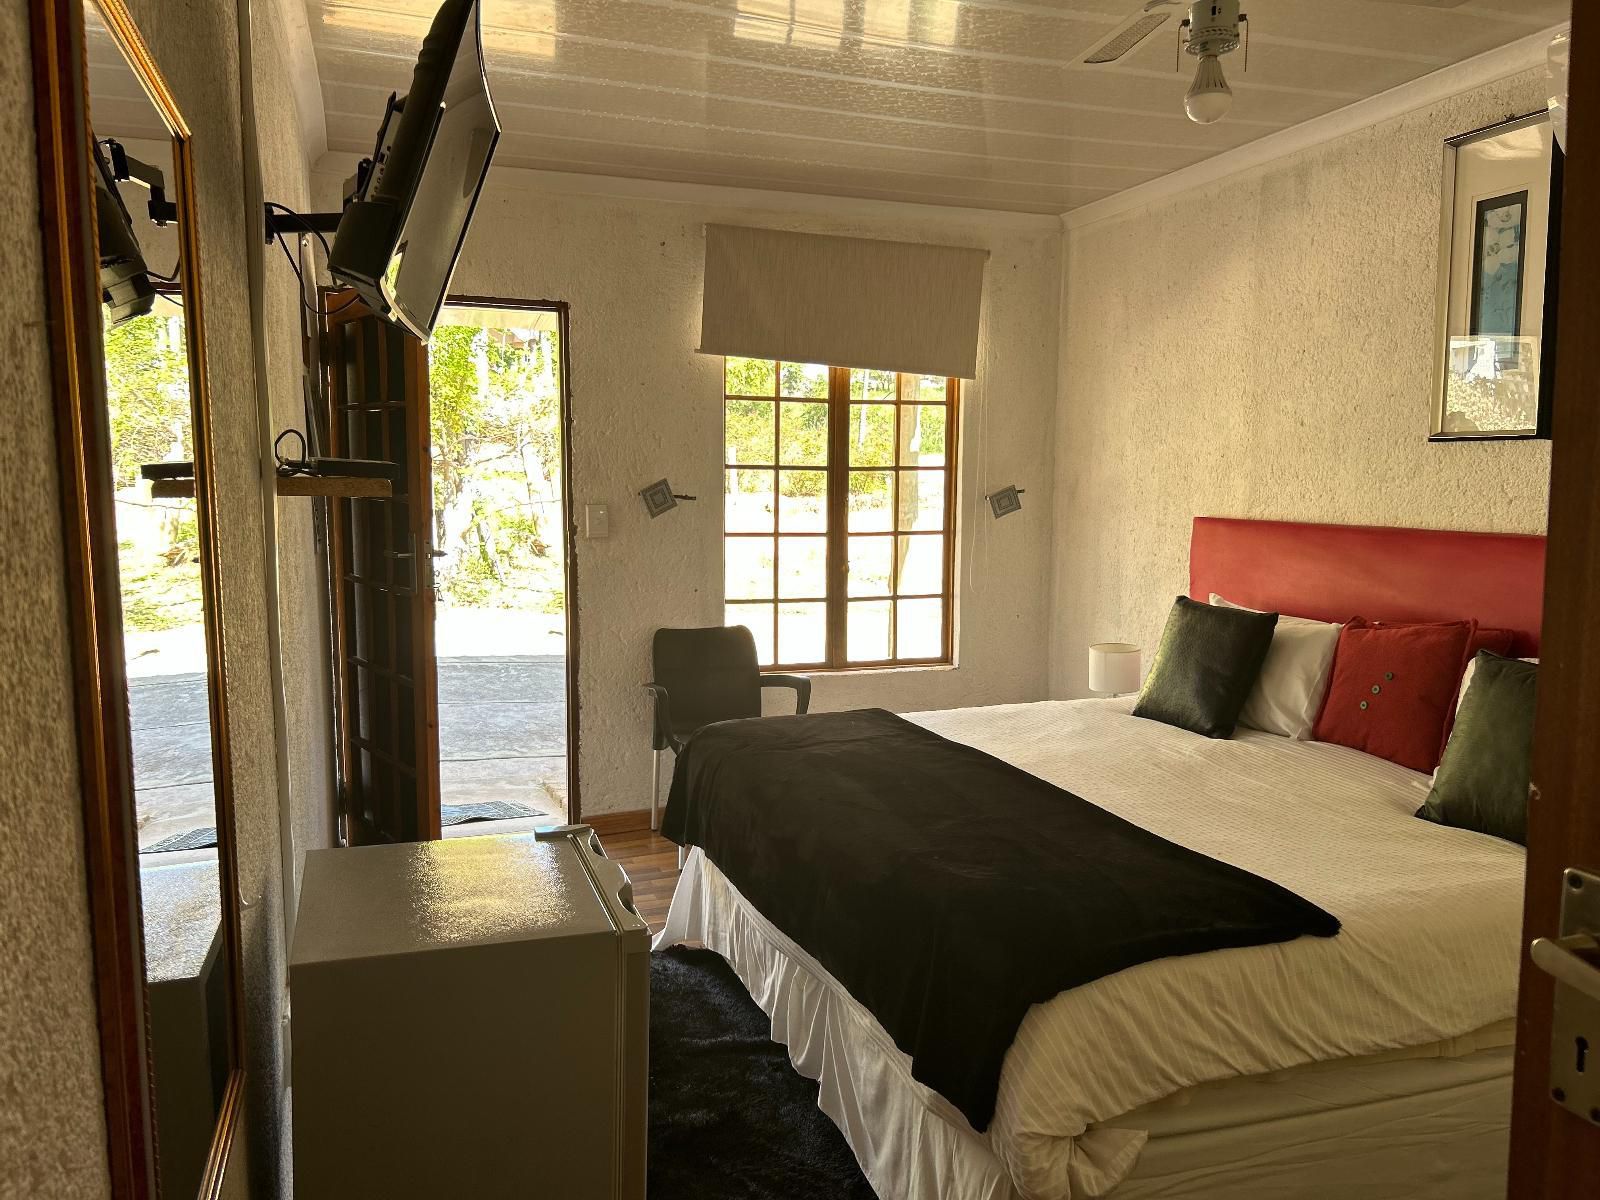 Mihandzu Guest House Hazyview Mpumalanga South Africa Sepia Tones, Bedroom